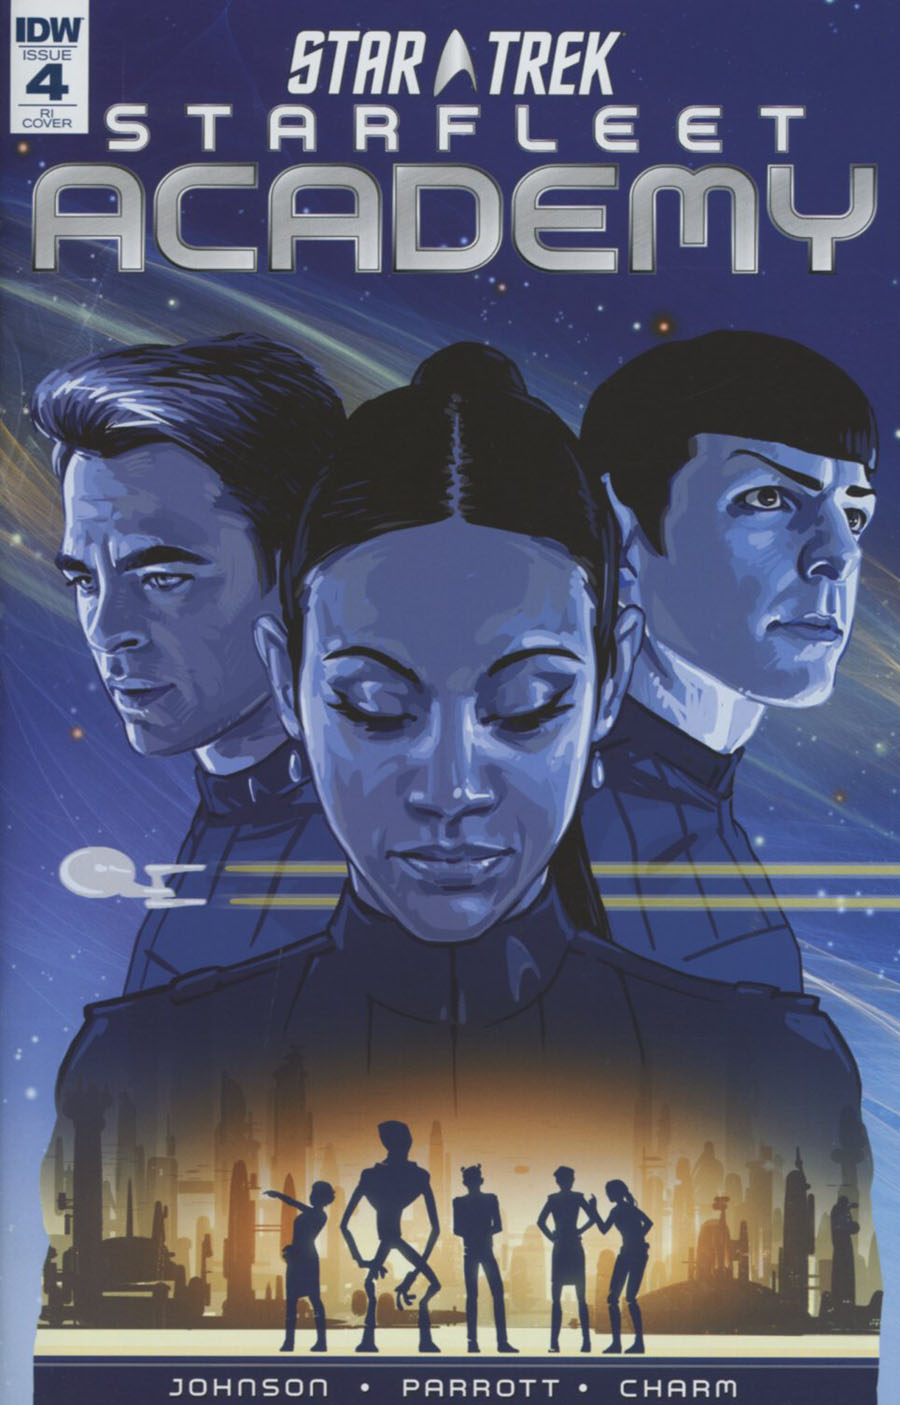 Star Trek Starfleet Academy (IDW) #4 Cover C Incentive David Malan Variant Cover